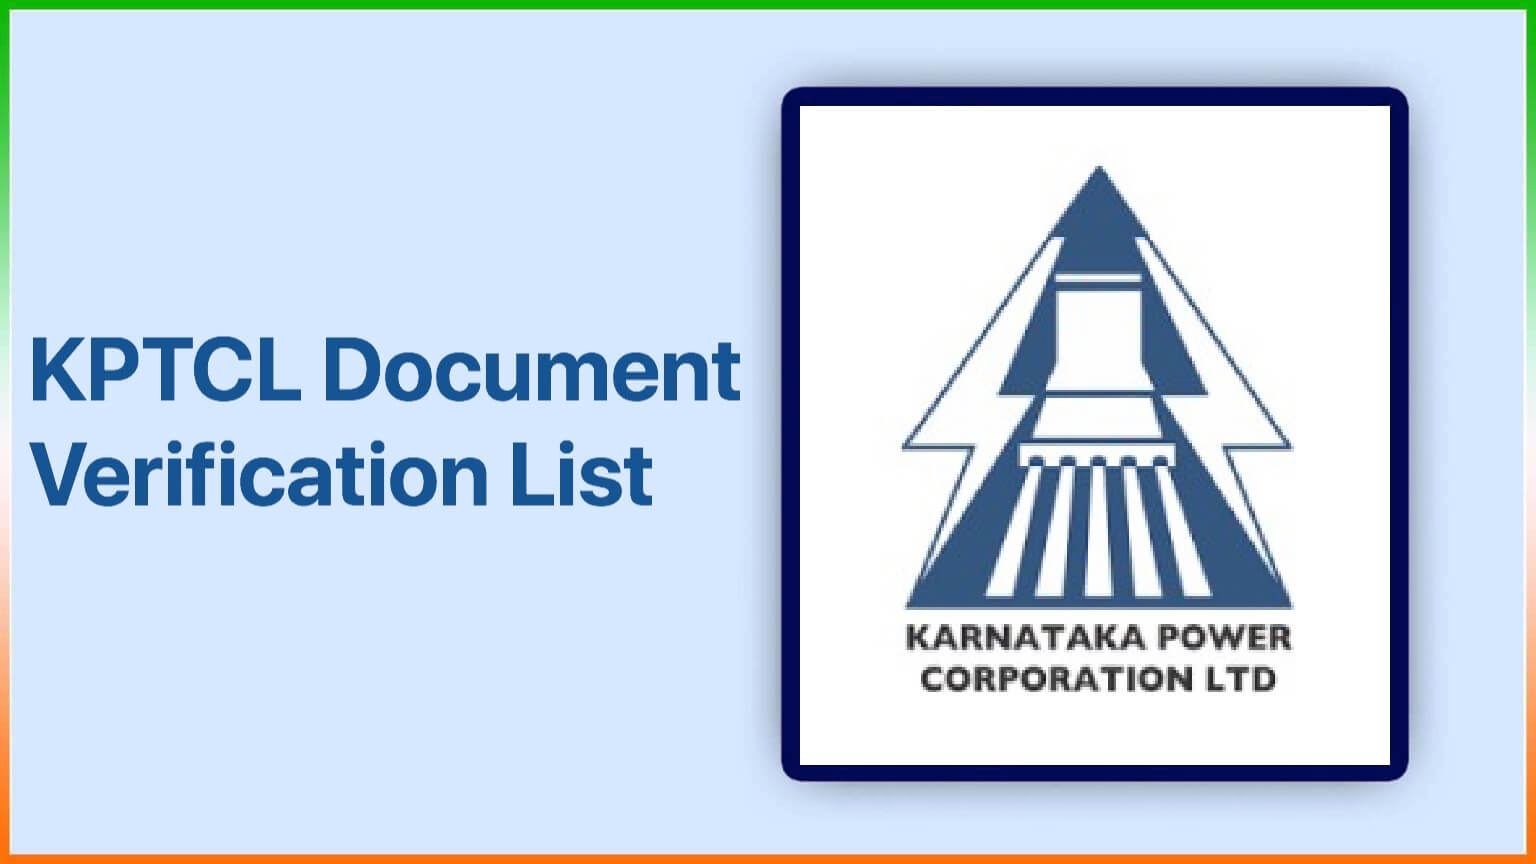 Kptcl Document Verification List